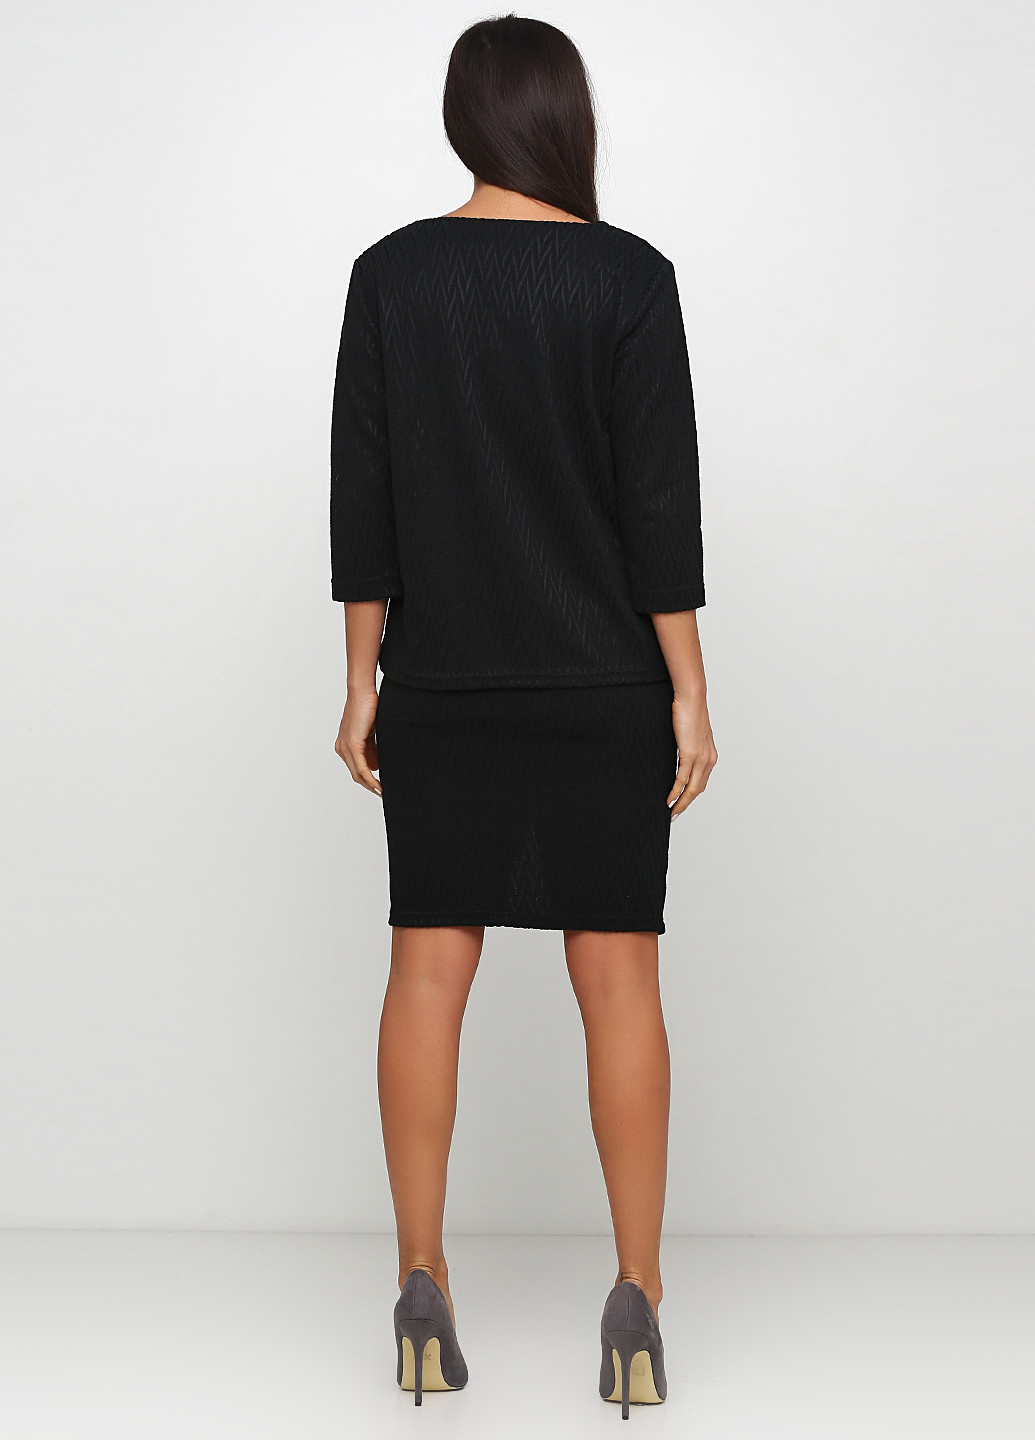 Костюм (блуза, юбка) Minus юбочный рисунок чёрный кэжуал полиэстер